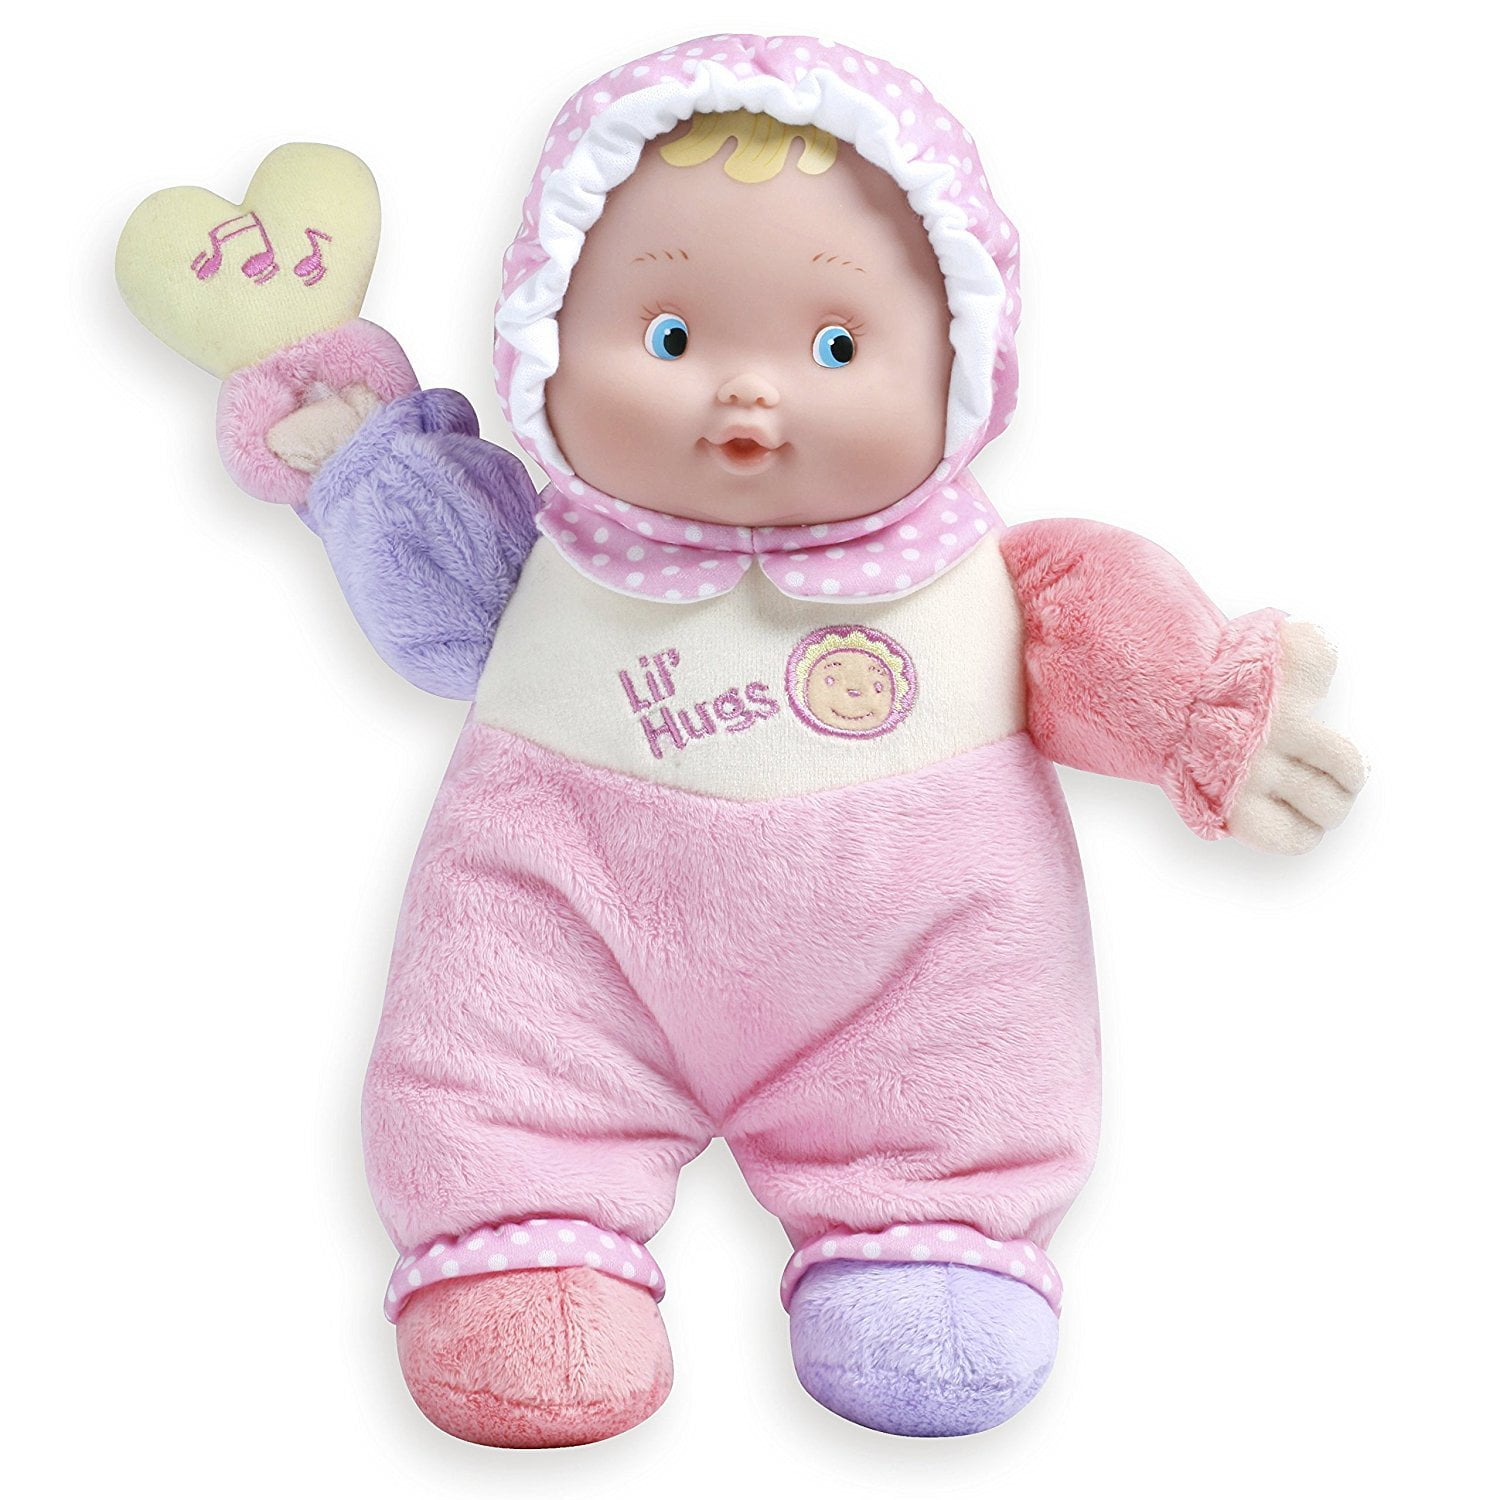 First Baby Doll Online, 55% OFF | www.ingeniovirtual.com